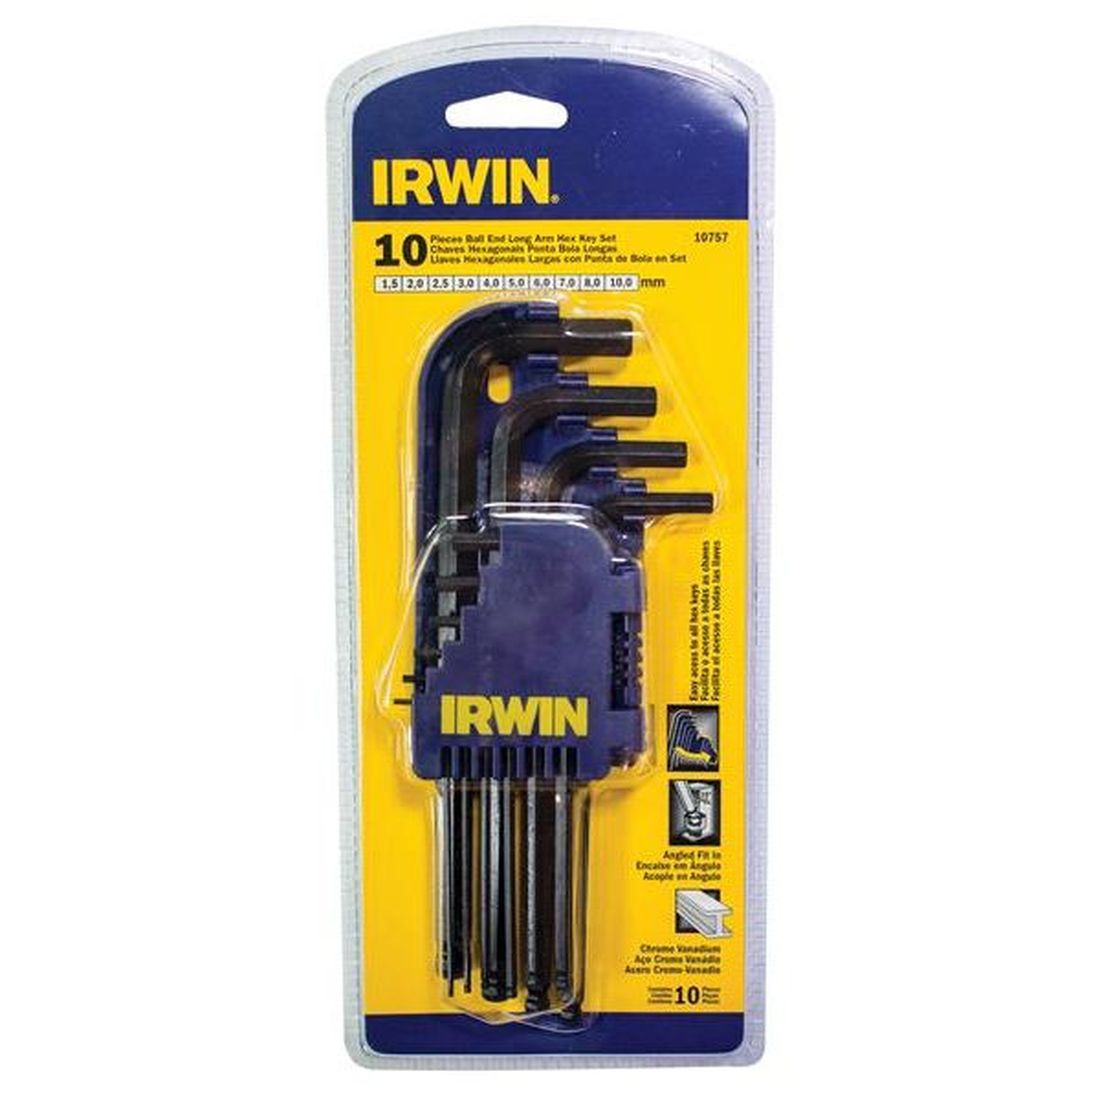 IRWIN T10757 Long Arm Ball End Hex Key Set, 10 Piece (1.5-10mm)                       